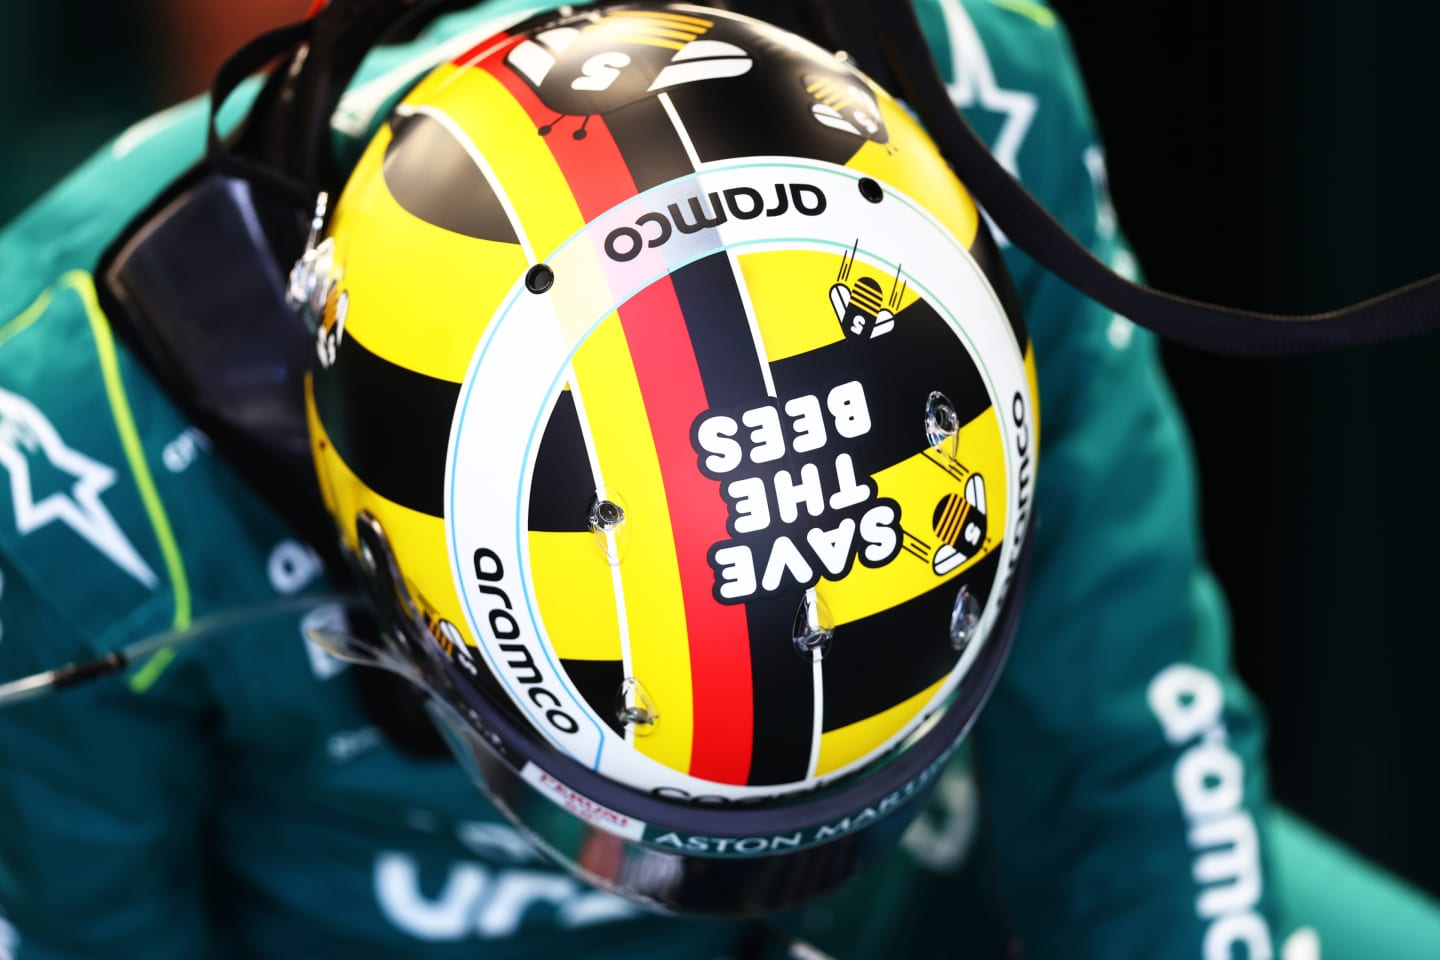 SPIELBERG, AUSTRIA - JULY 09: A detail shot of the Save the Bees race helmet of Sebastian Vettel of